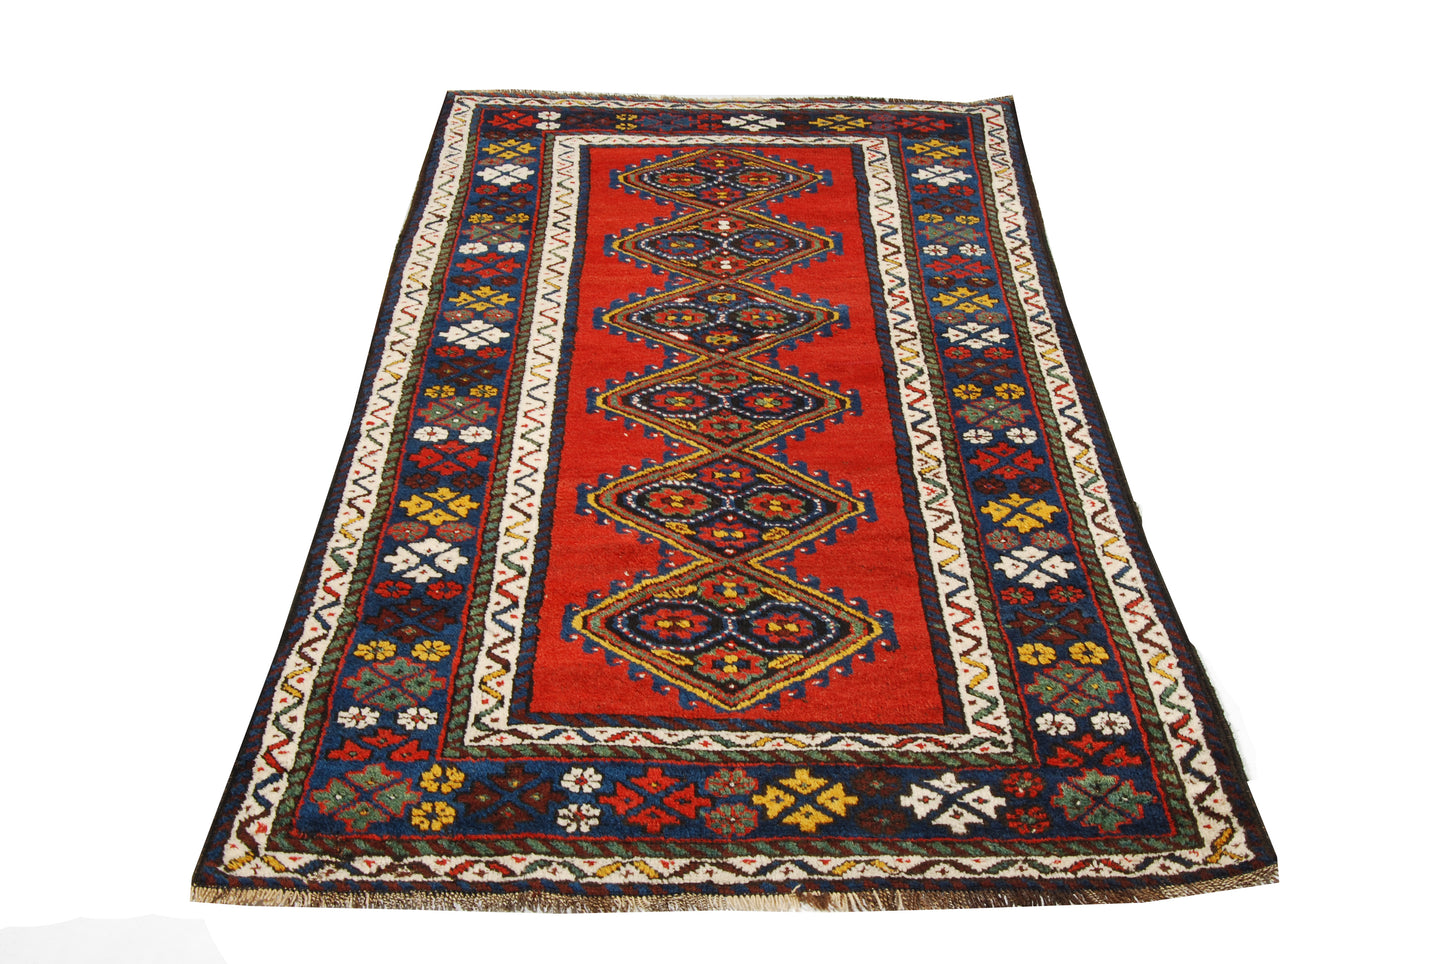 Authentic original hand knotted carpet 190x105 CM